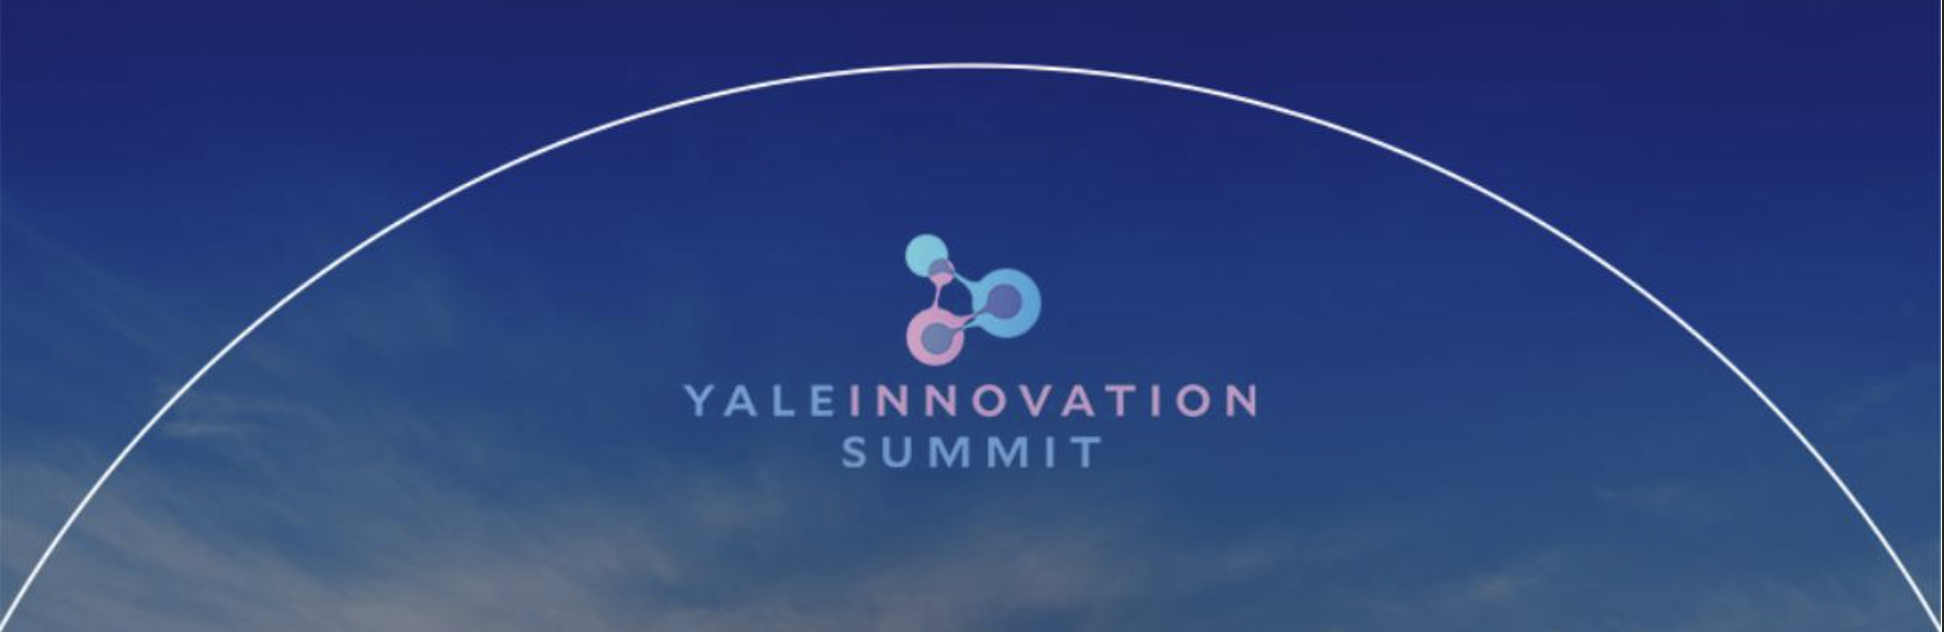 Frank Milone talks entrepreneurship and Yale Innovation Summit on WNPR